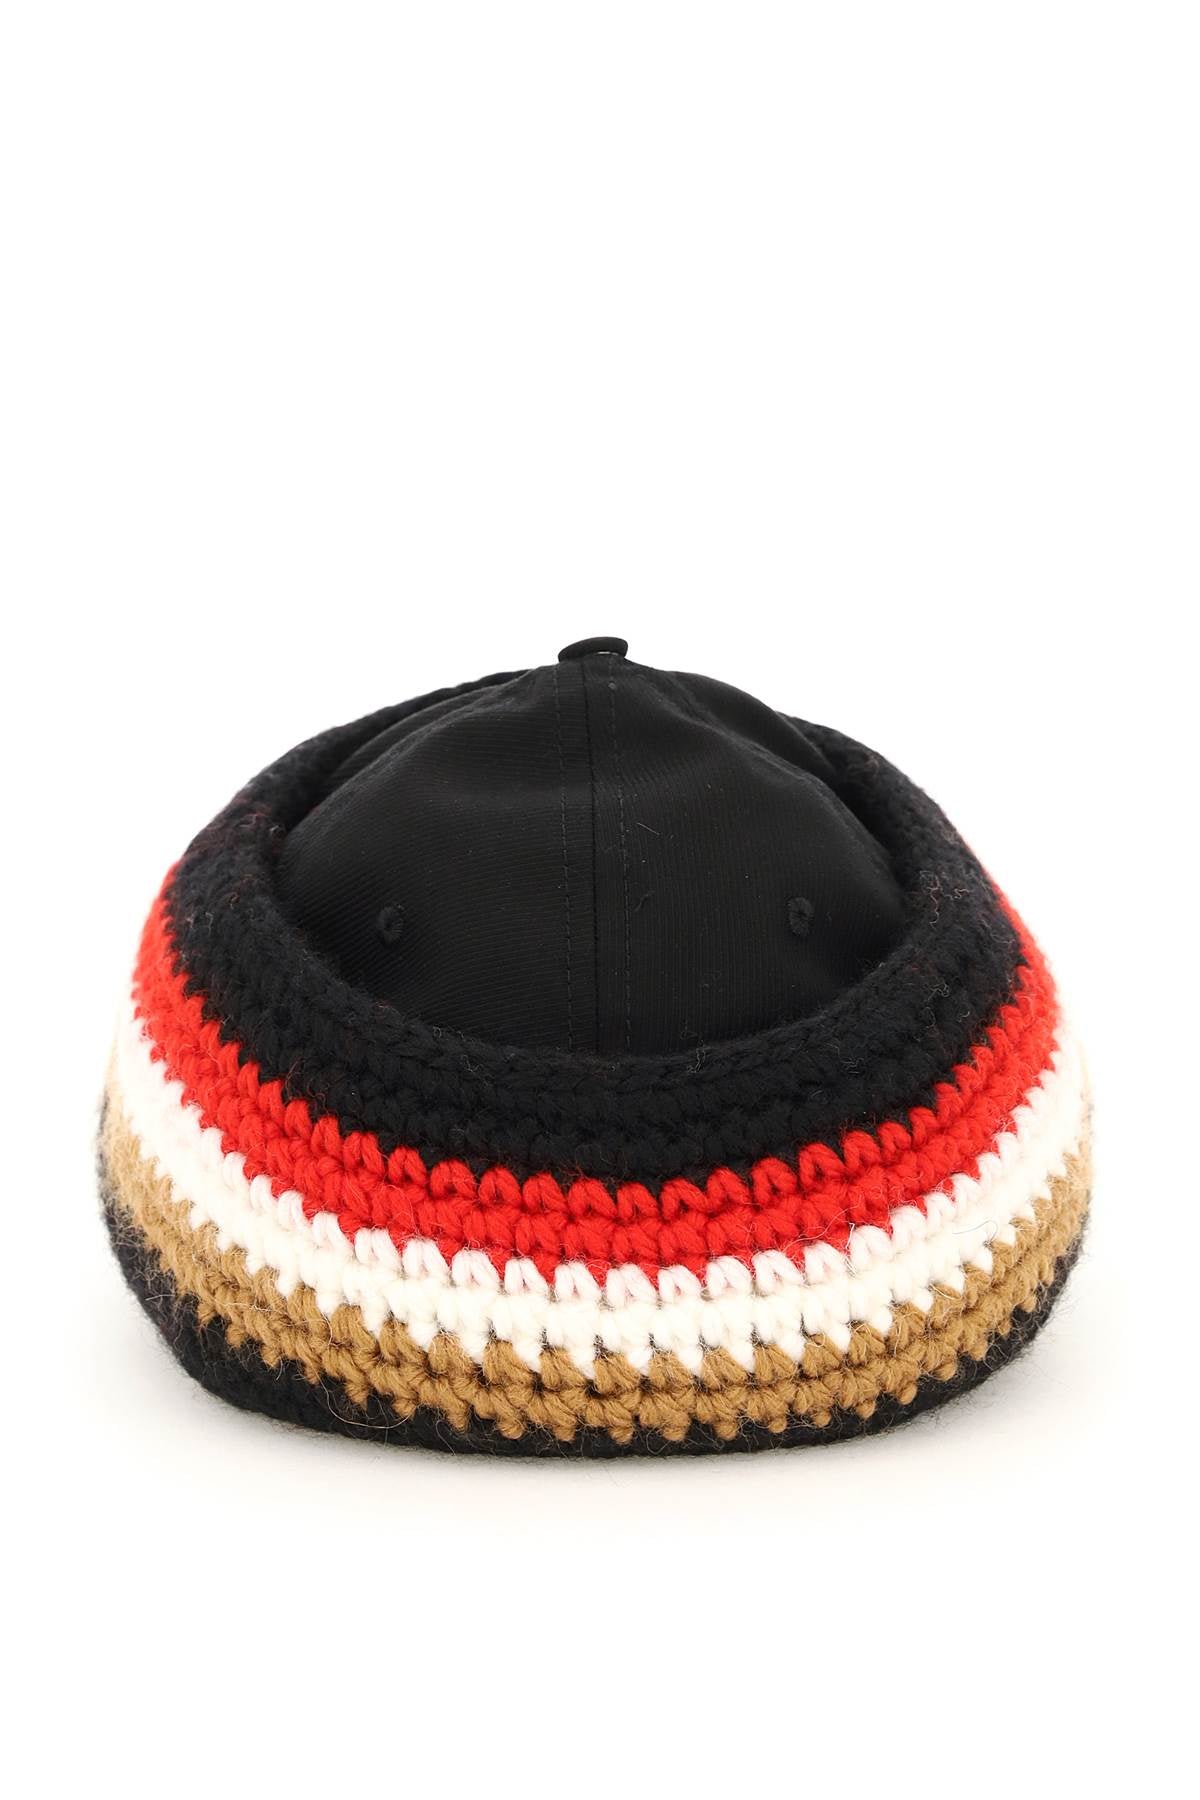 Burberry Baseball Cap With Knit Headband   Black